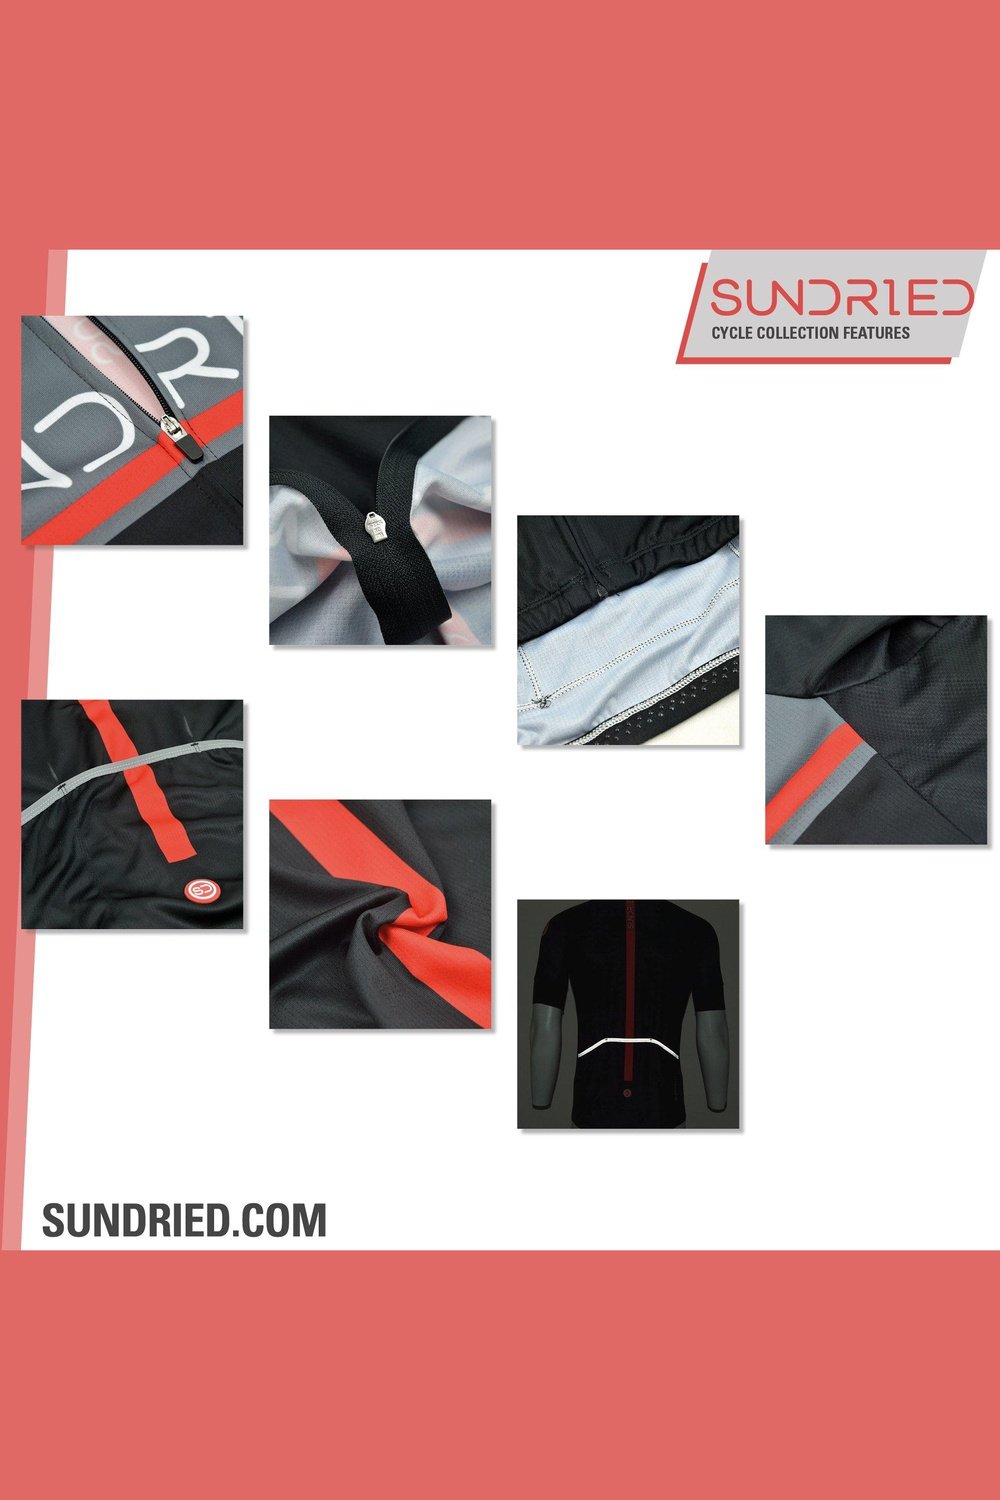 Sundried Peloton Men's Short Sleeve Training Cycle Jersey Short Sleeve Jersey Activewear